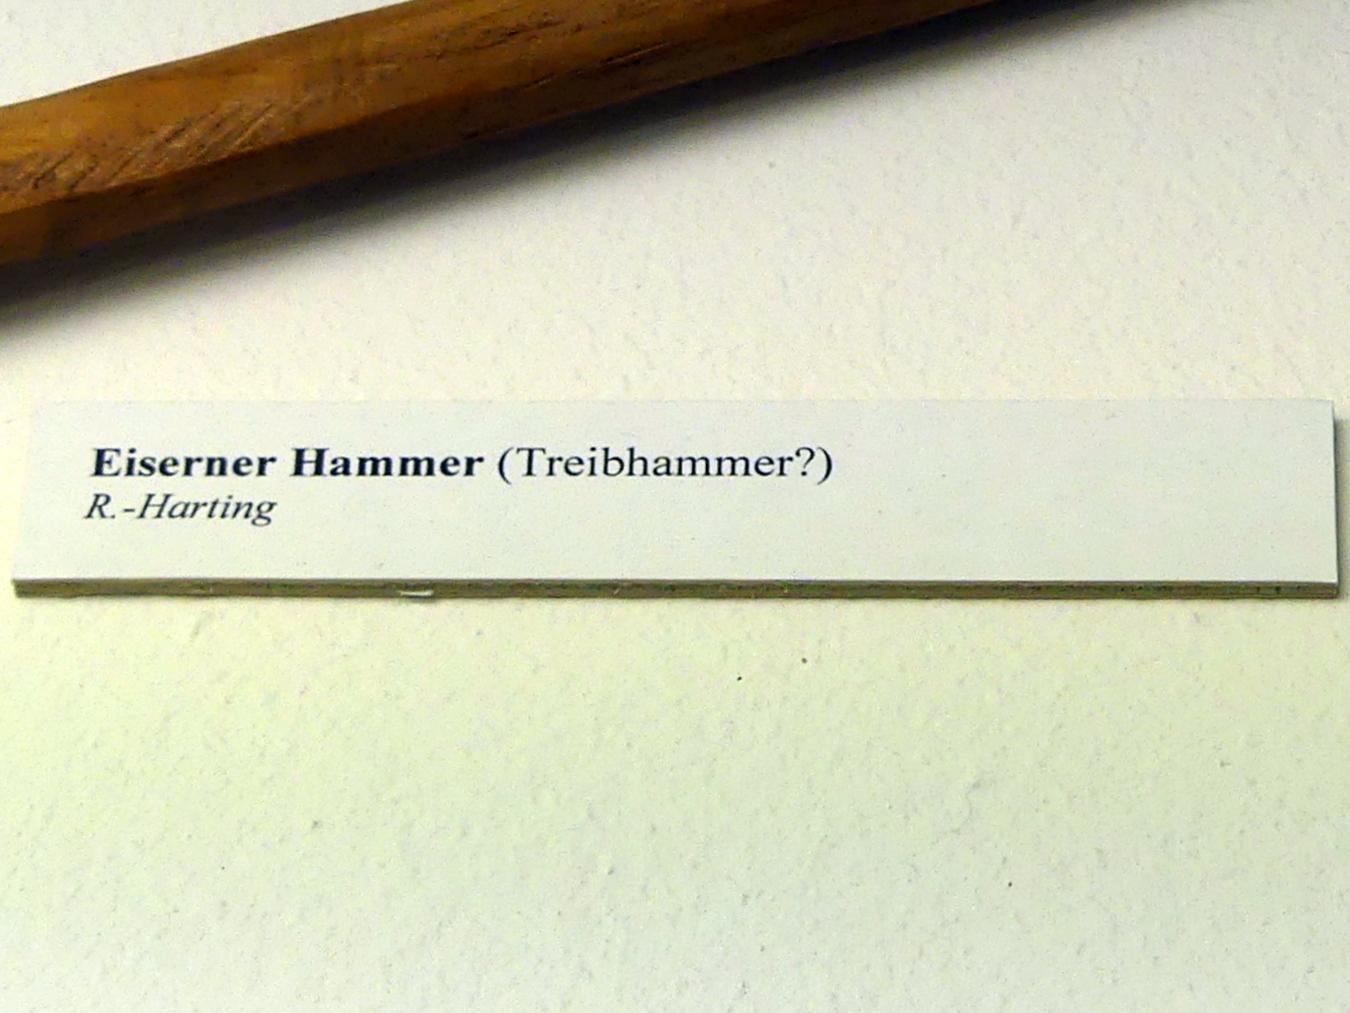 Eiserner Hammer (Treibhammer?), Frühlatènezeit A, 700 - 100 v. Chr., Bild 2/2